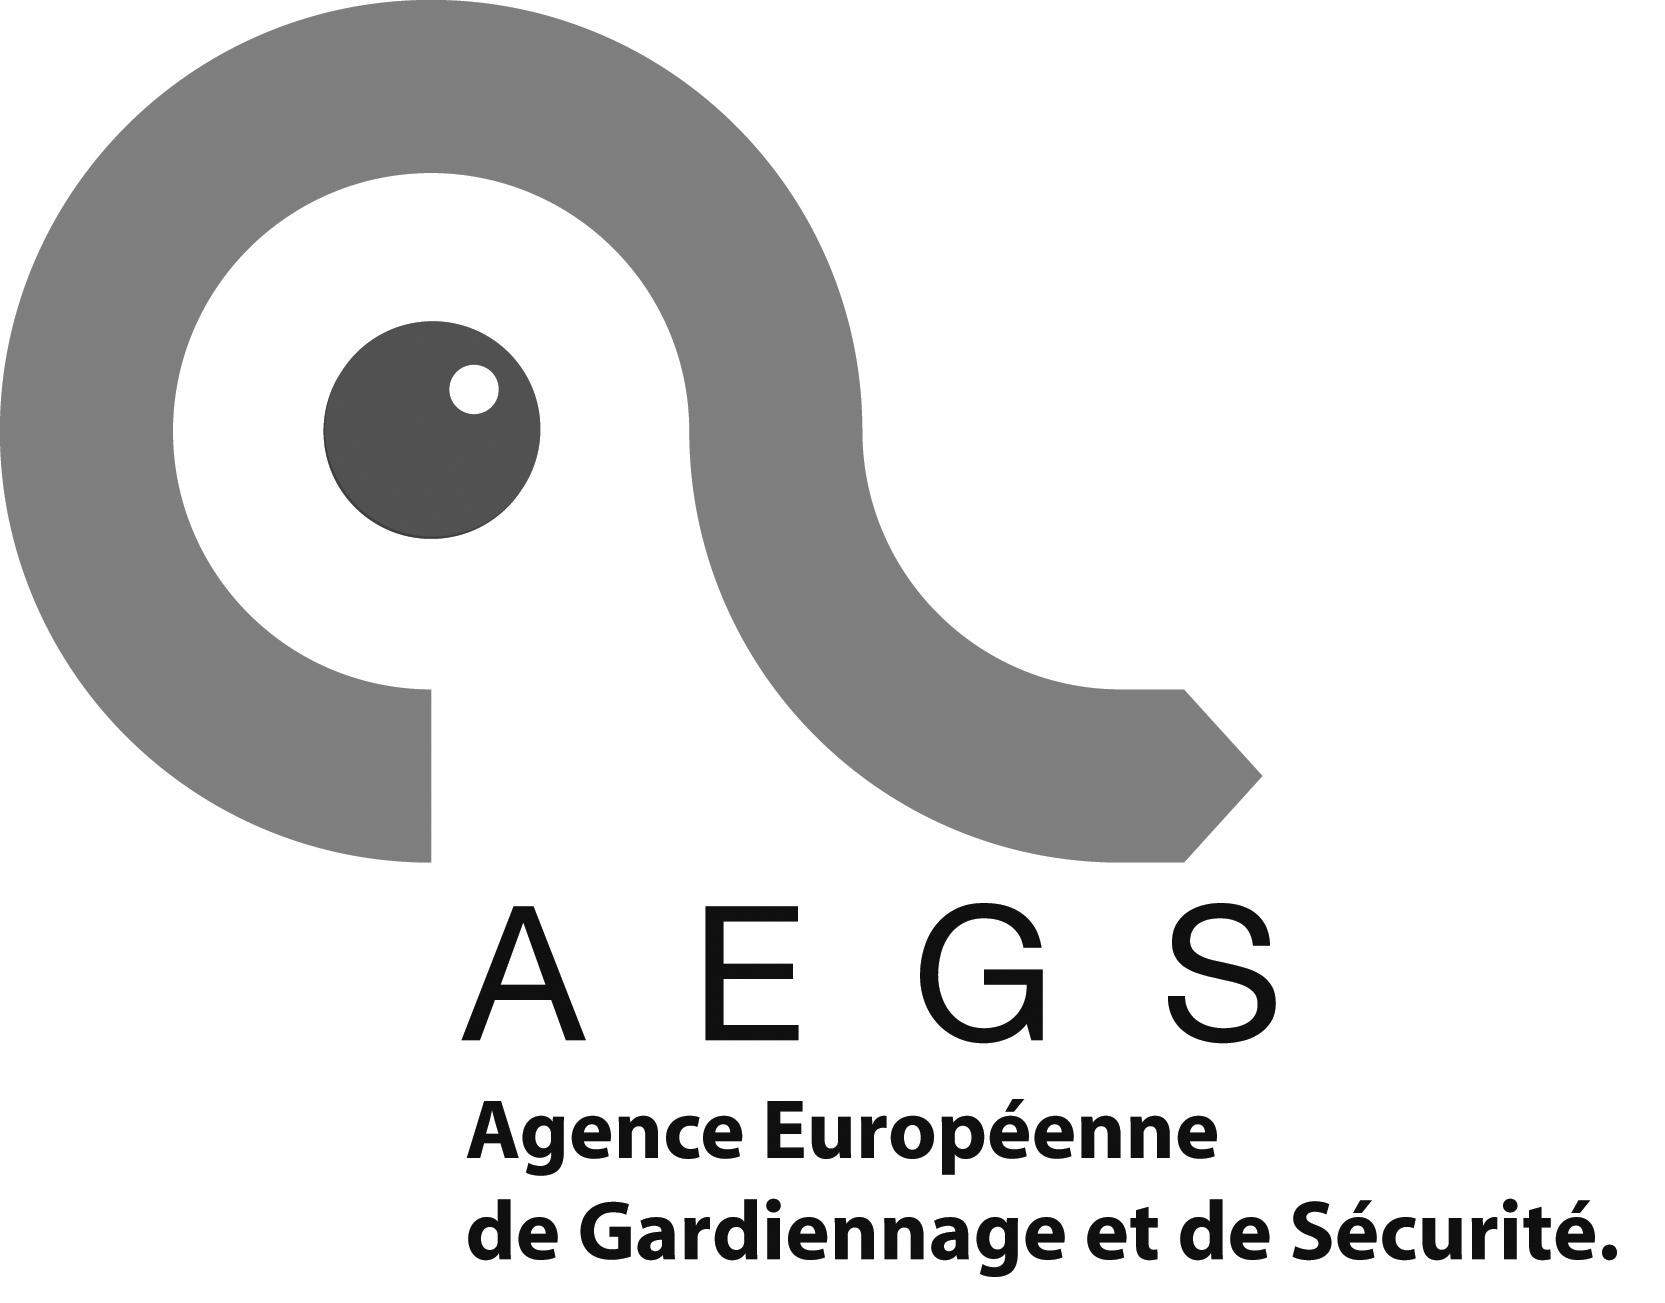 AEGSlogo+adress-1 (1)